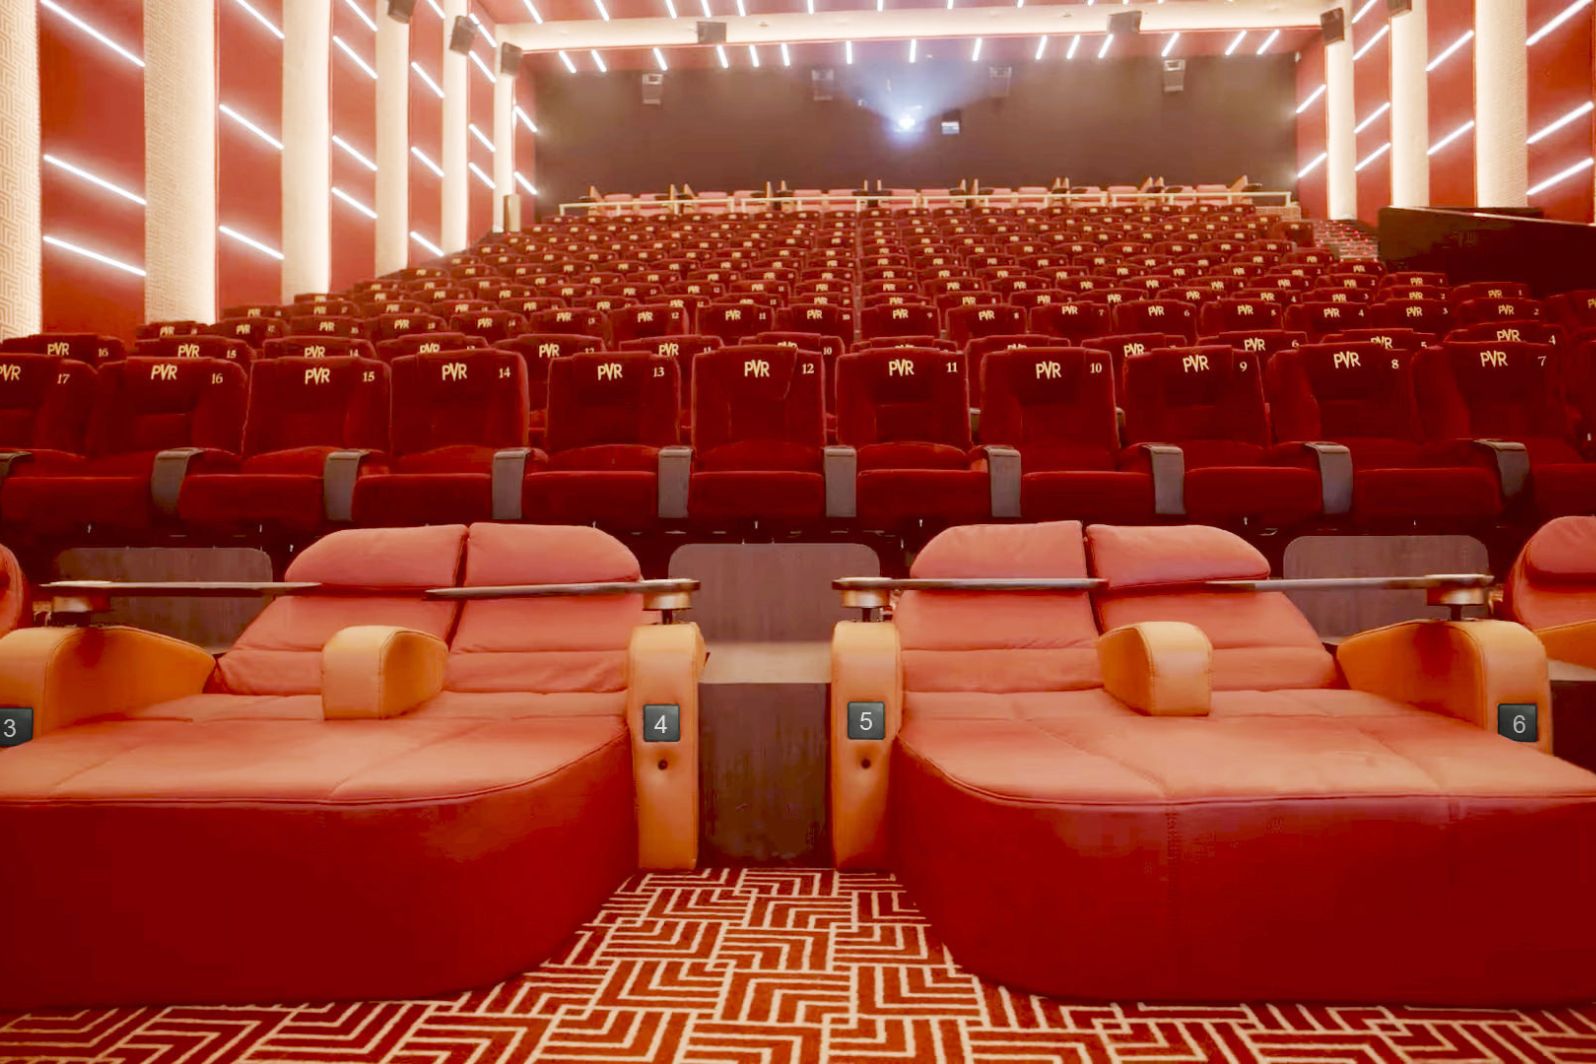 pvr 3c's cinema delhi